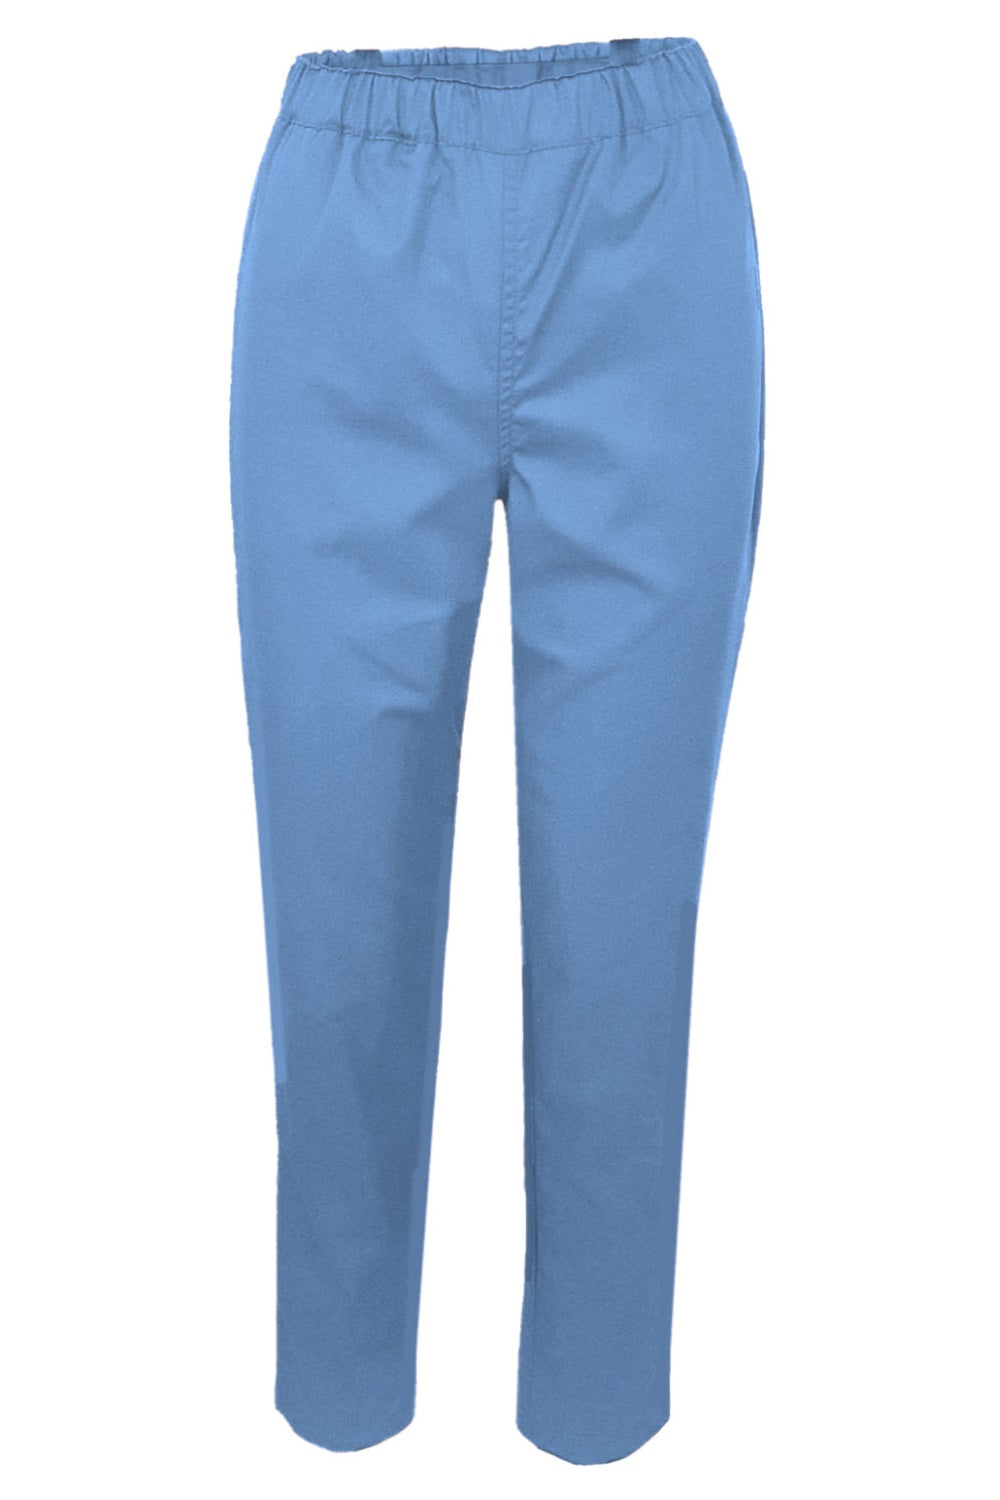 Pantaloni medicali Bleu Unisex Poplin 115gr Albert